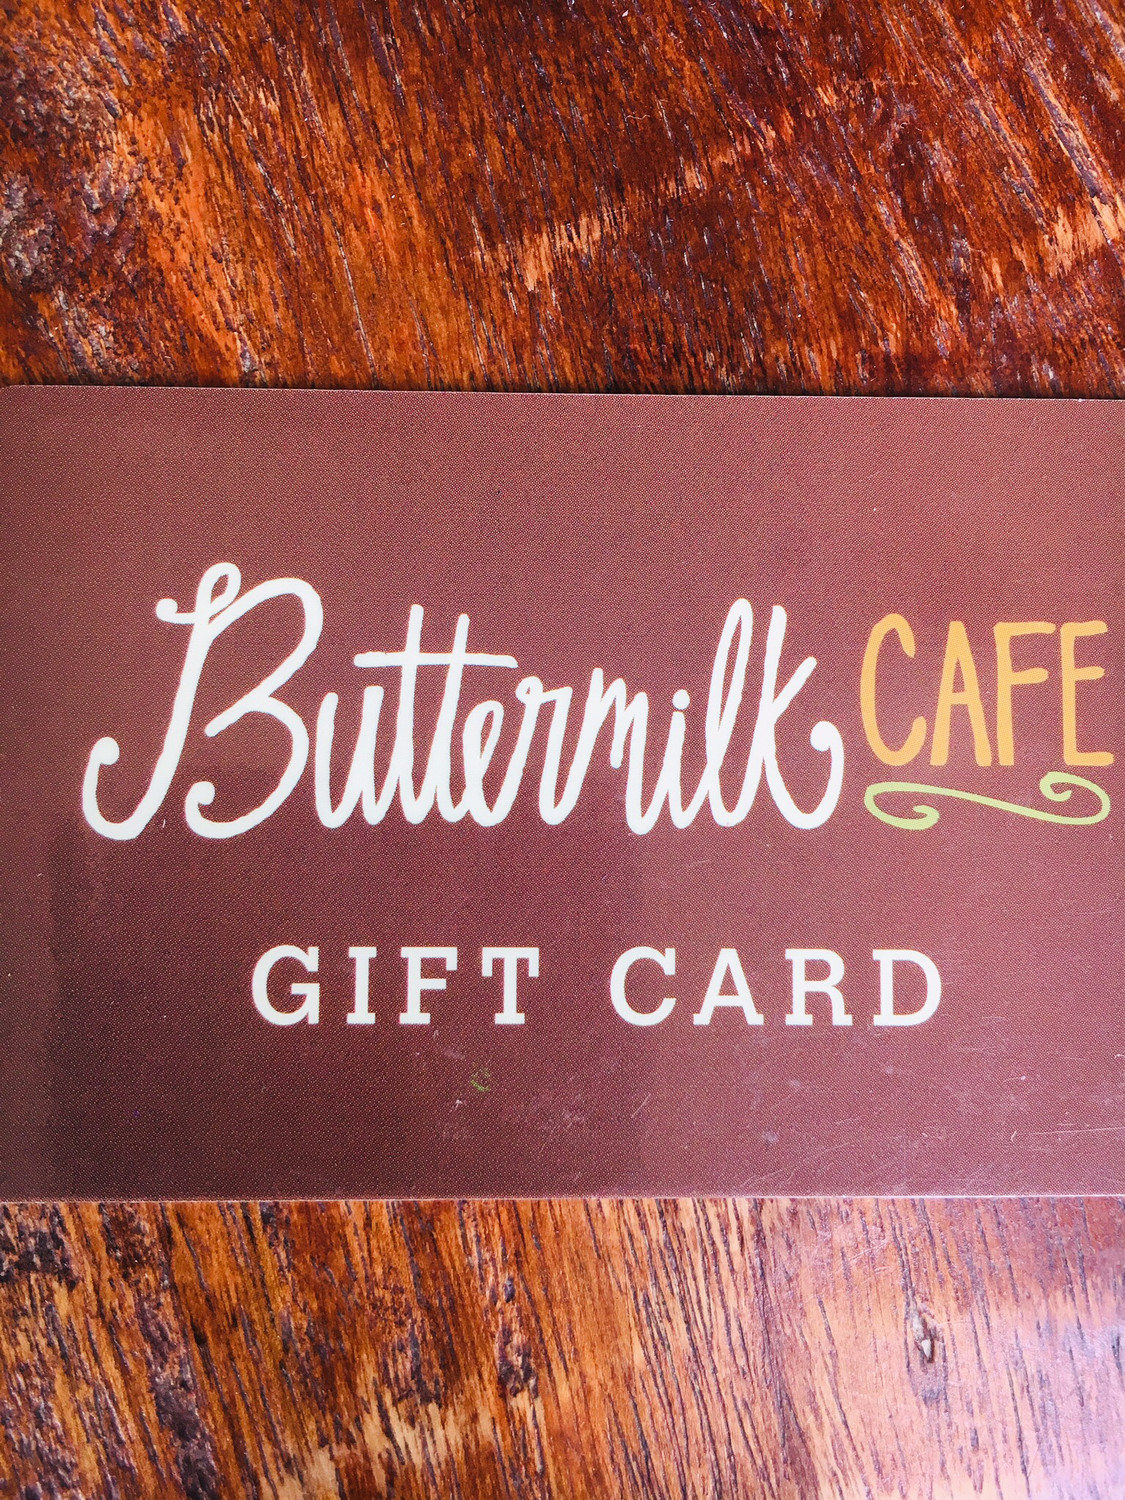 Buttermilk Cafe Gift Card